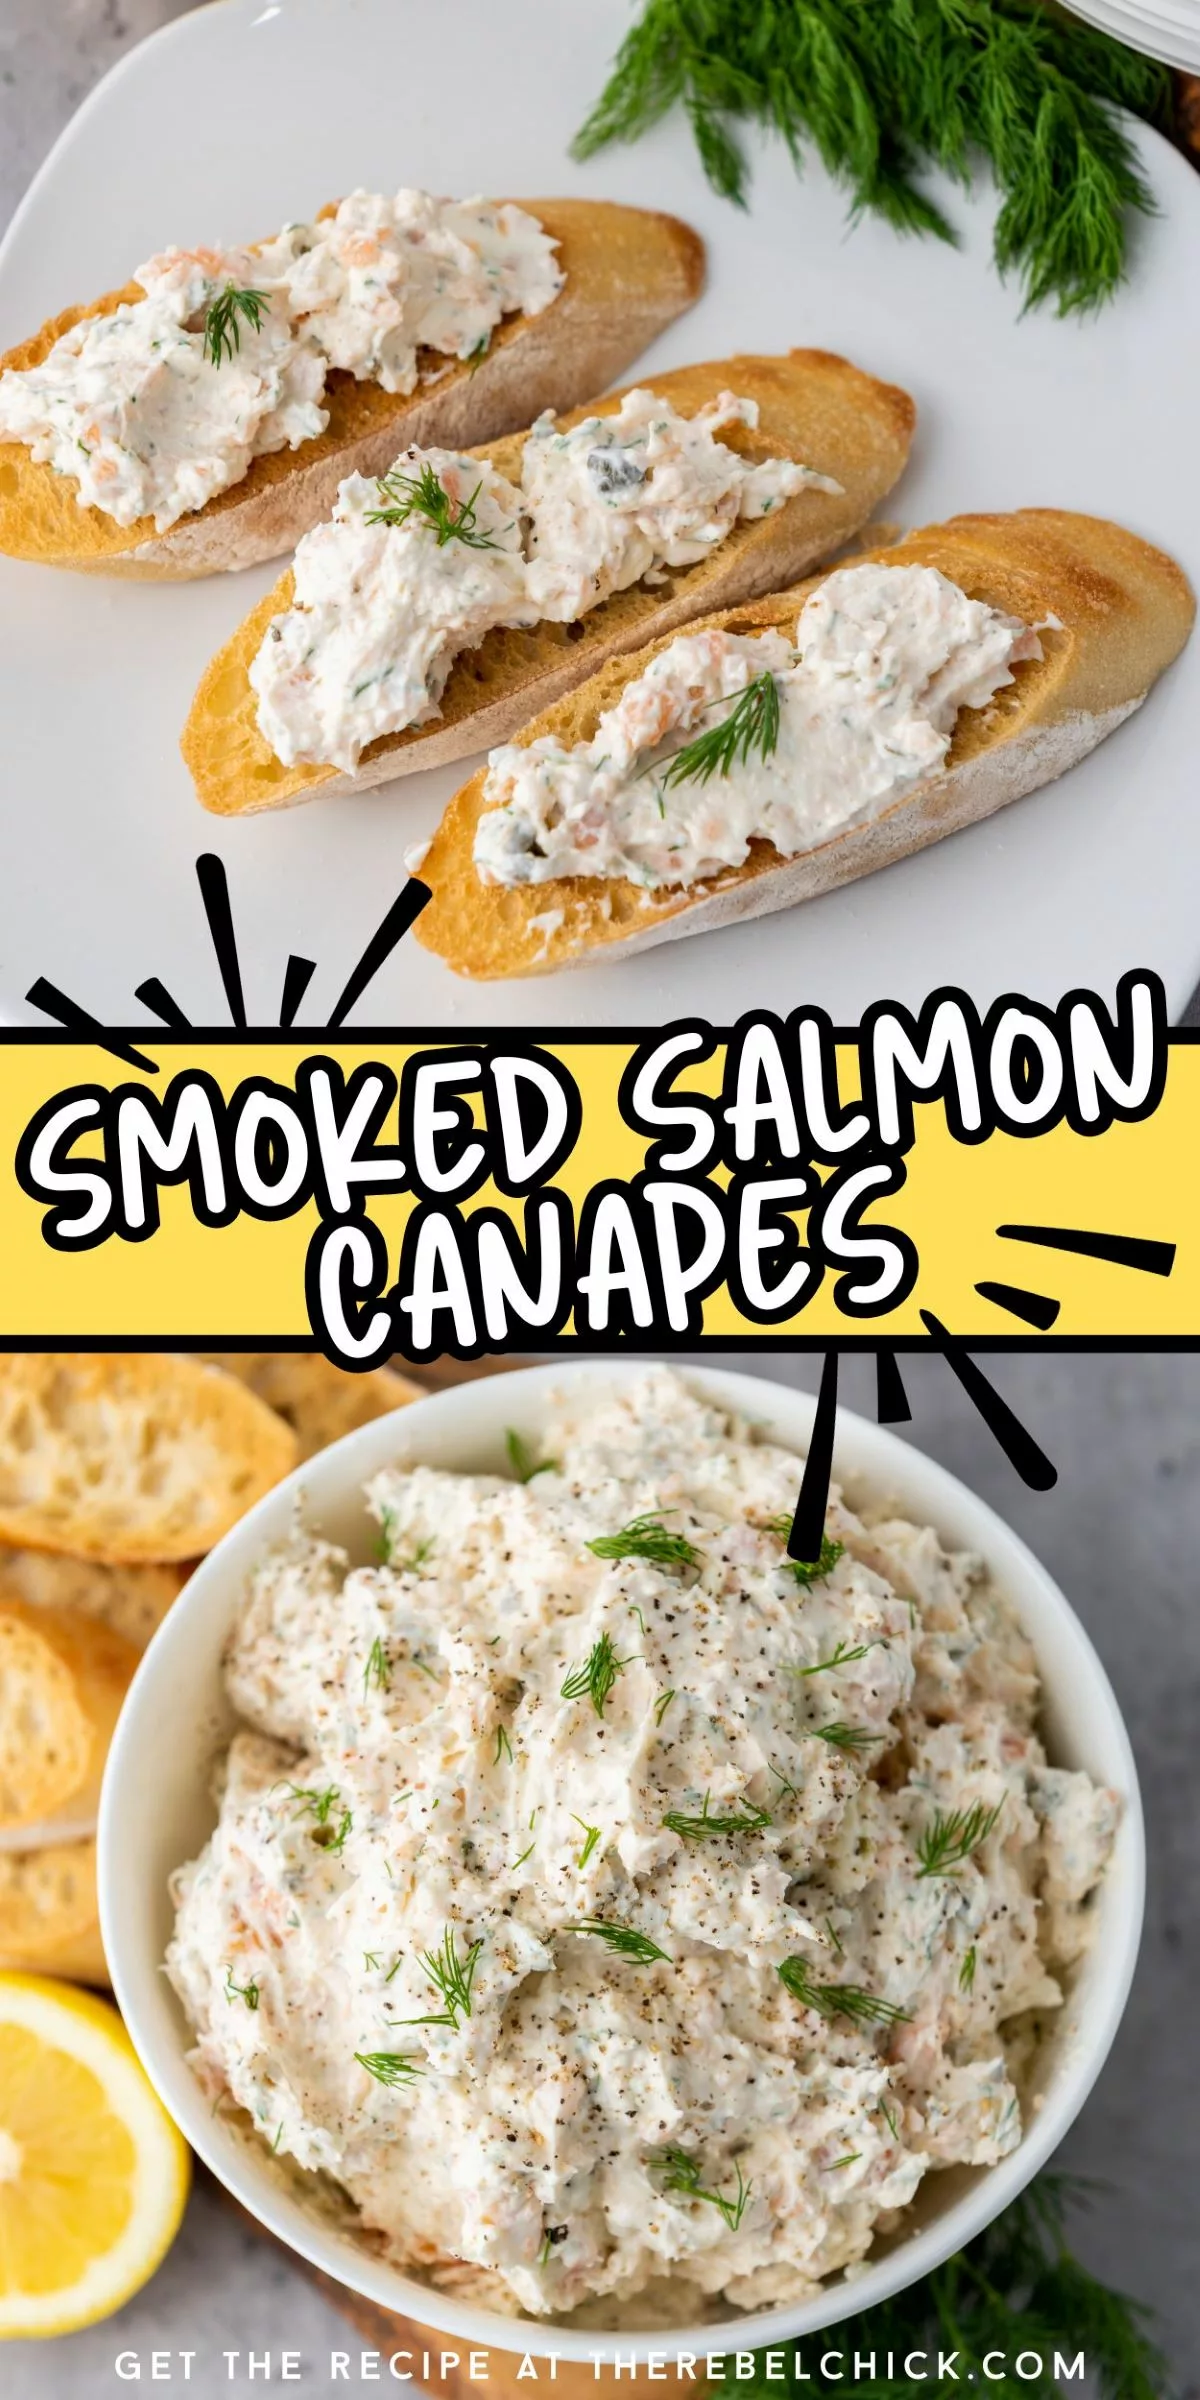 Smoked Salmon Canapes